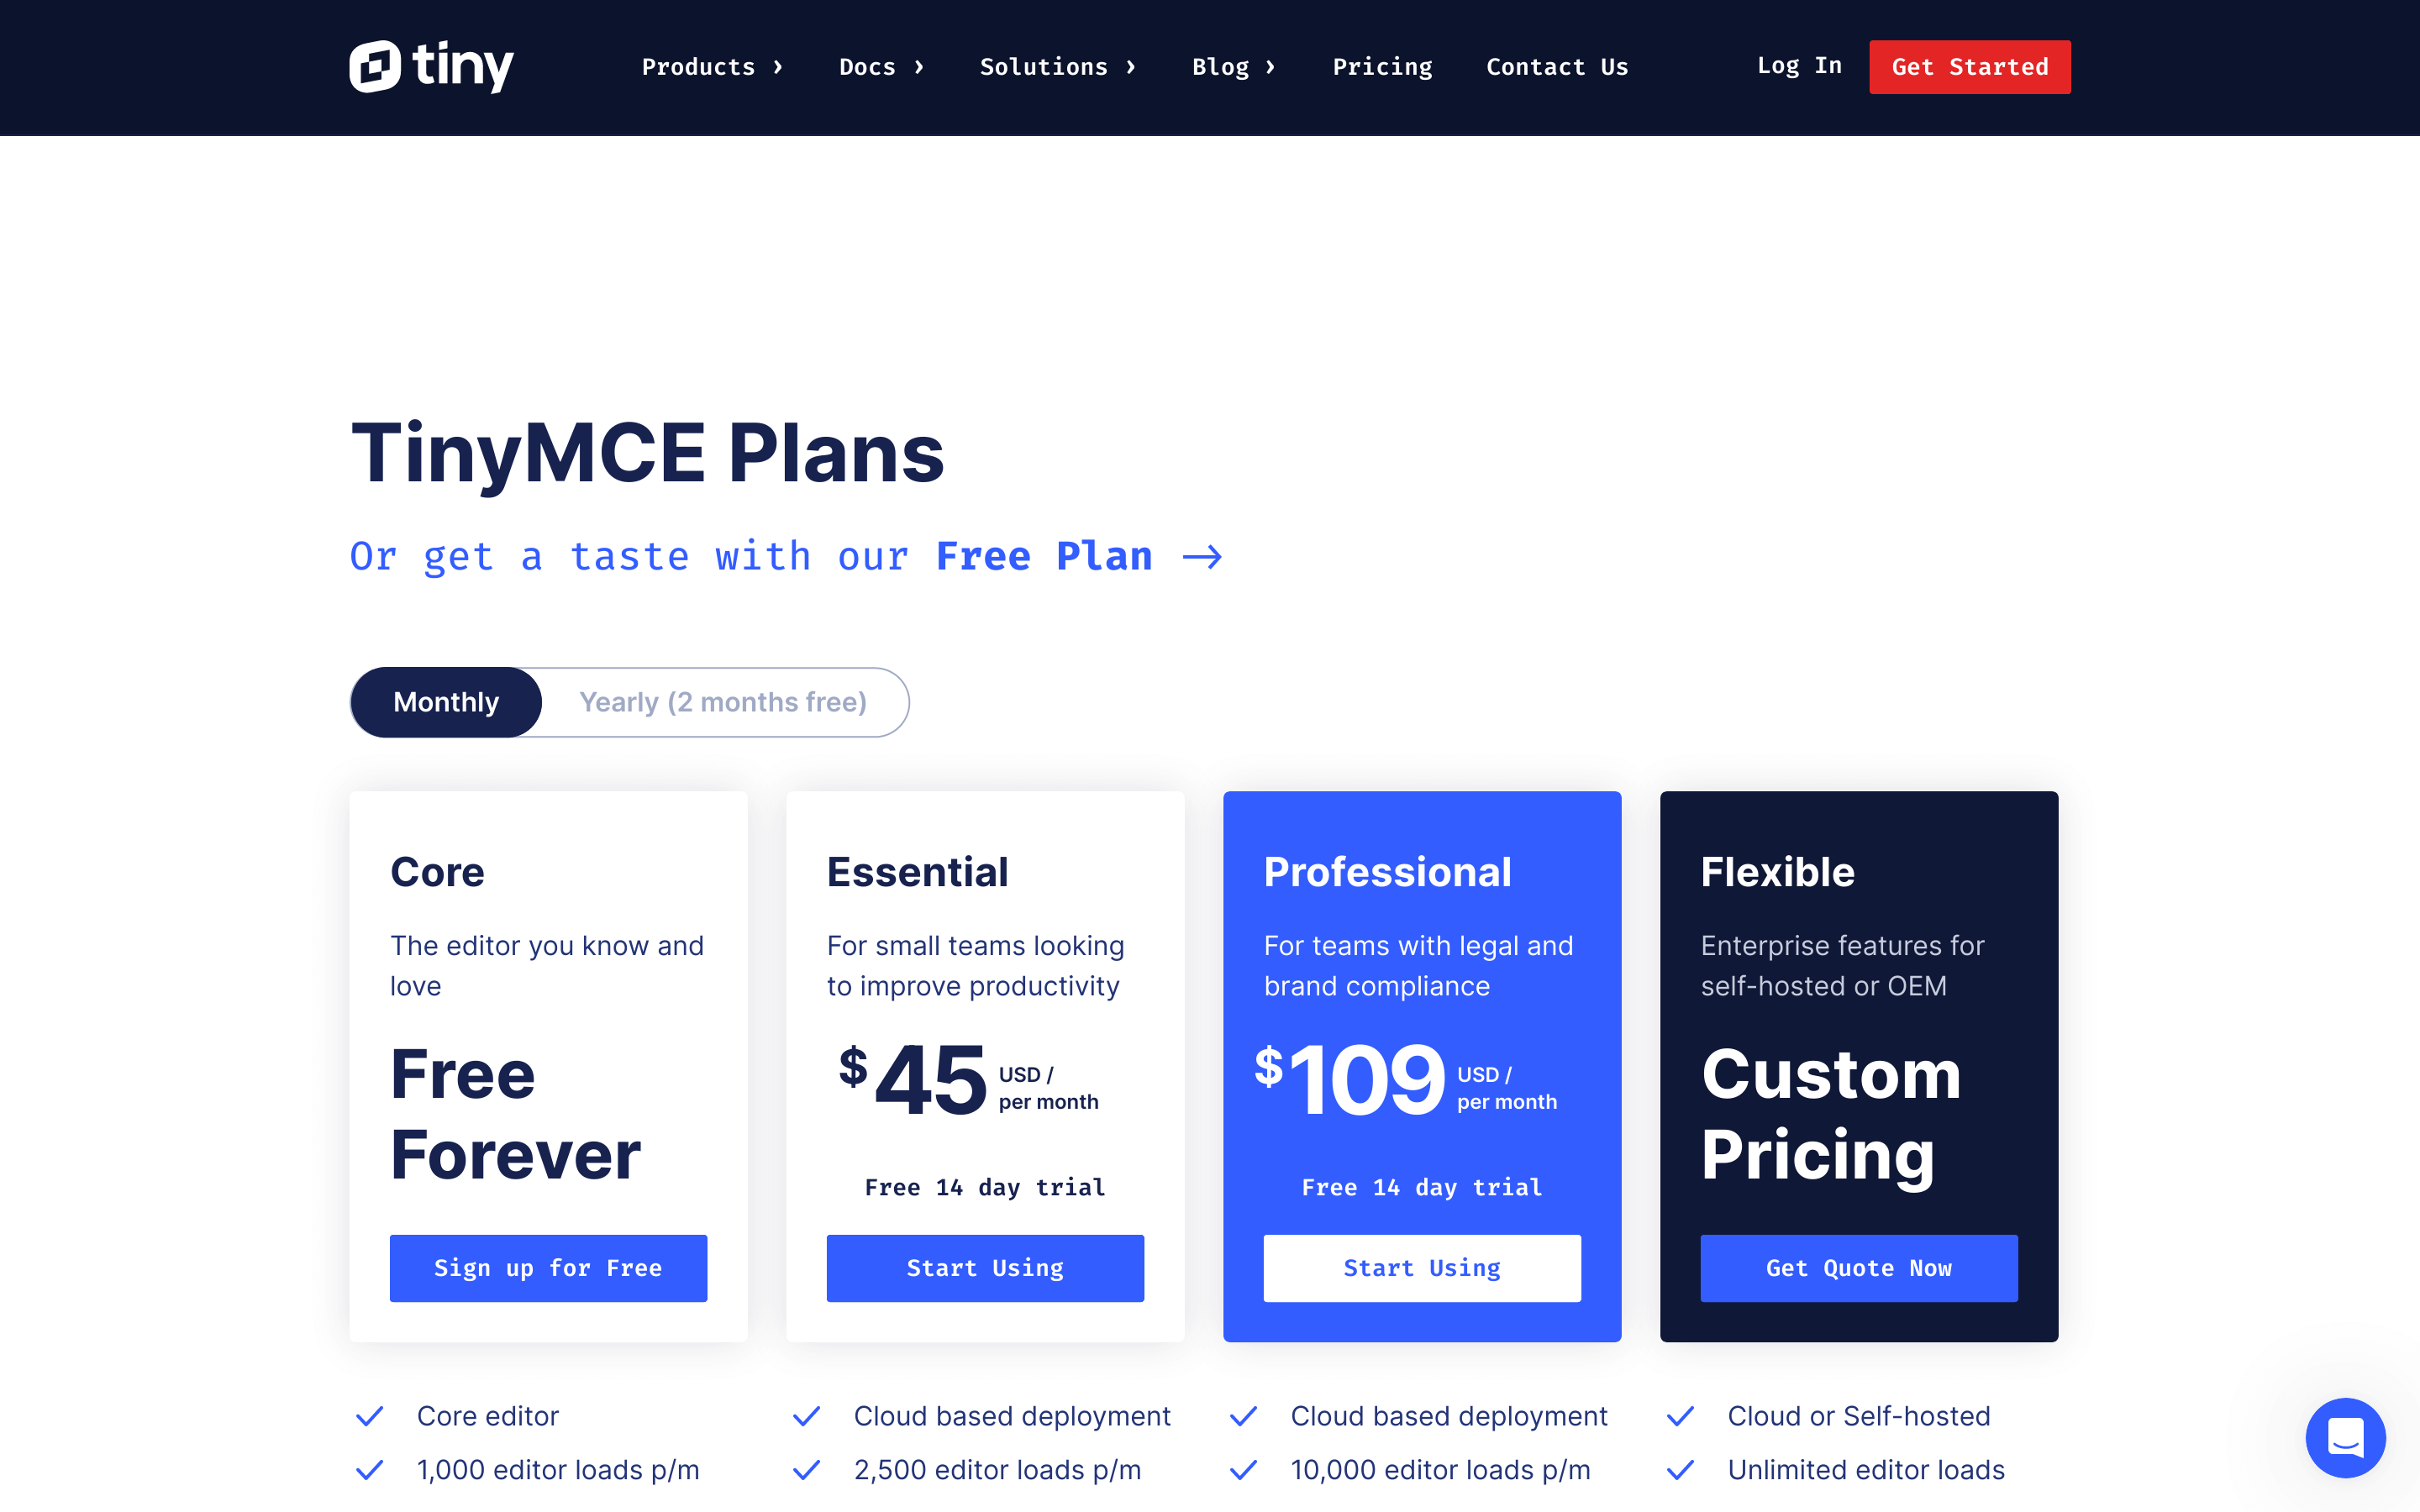 TinyMCE’s Pricing